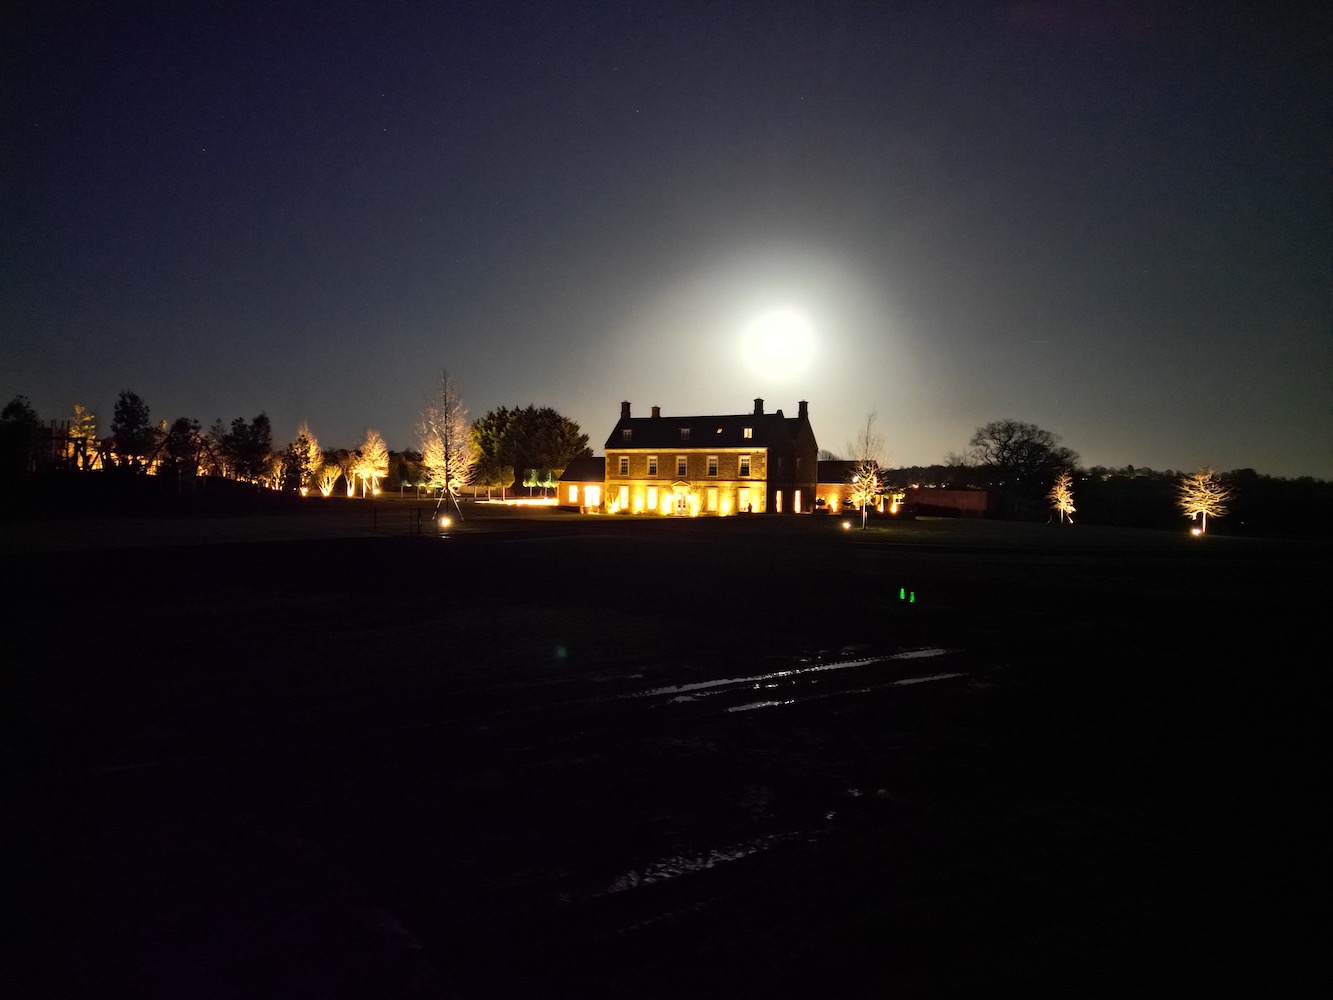 Moon in the night sky over Georgian Manor House 